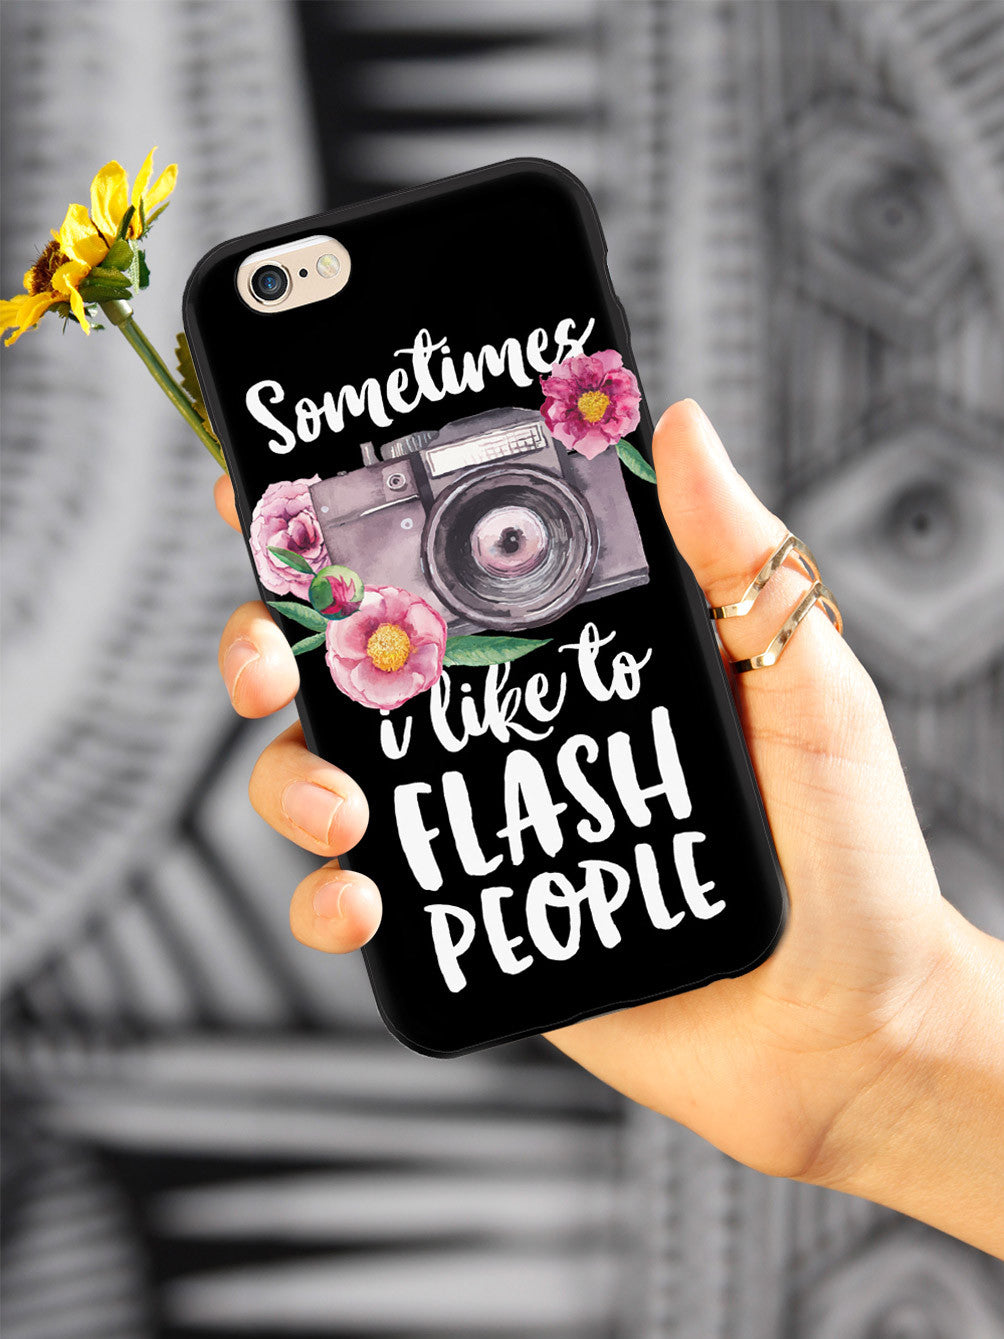 Sometimes I Like to Flash People - Black Case